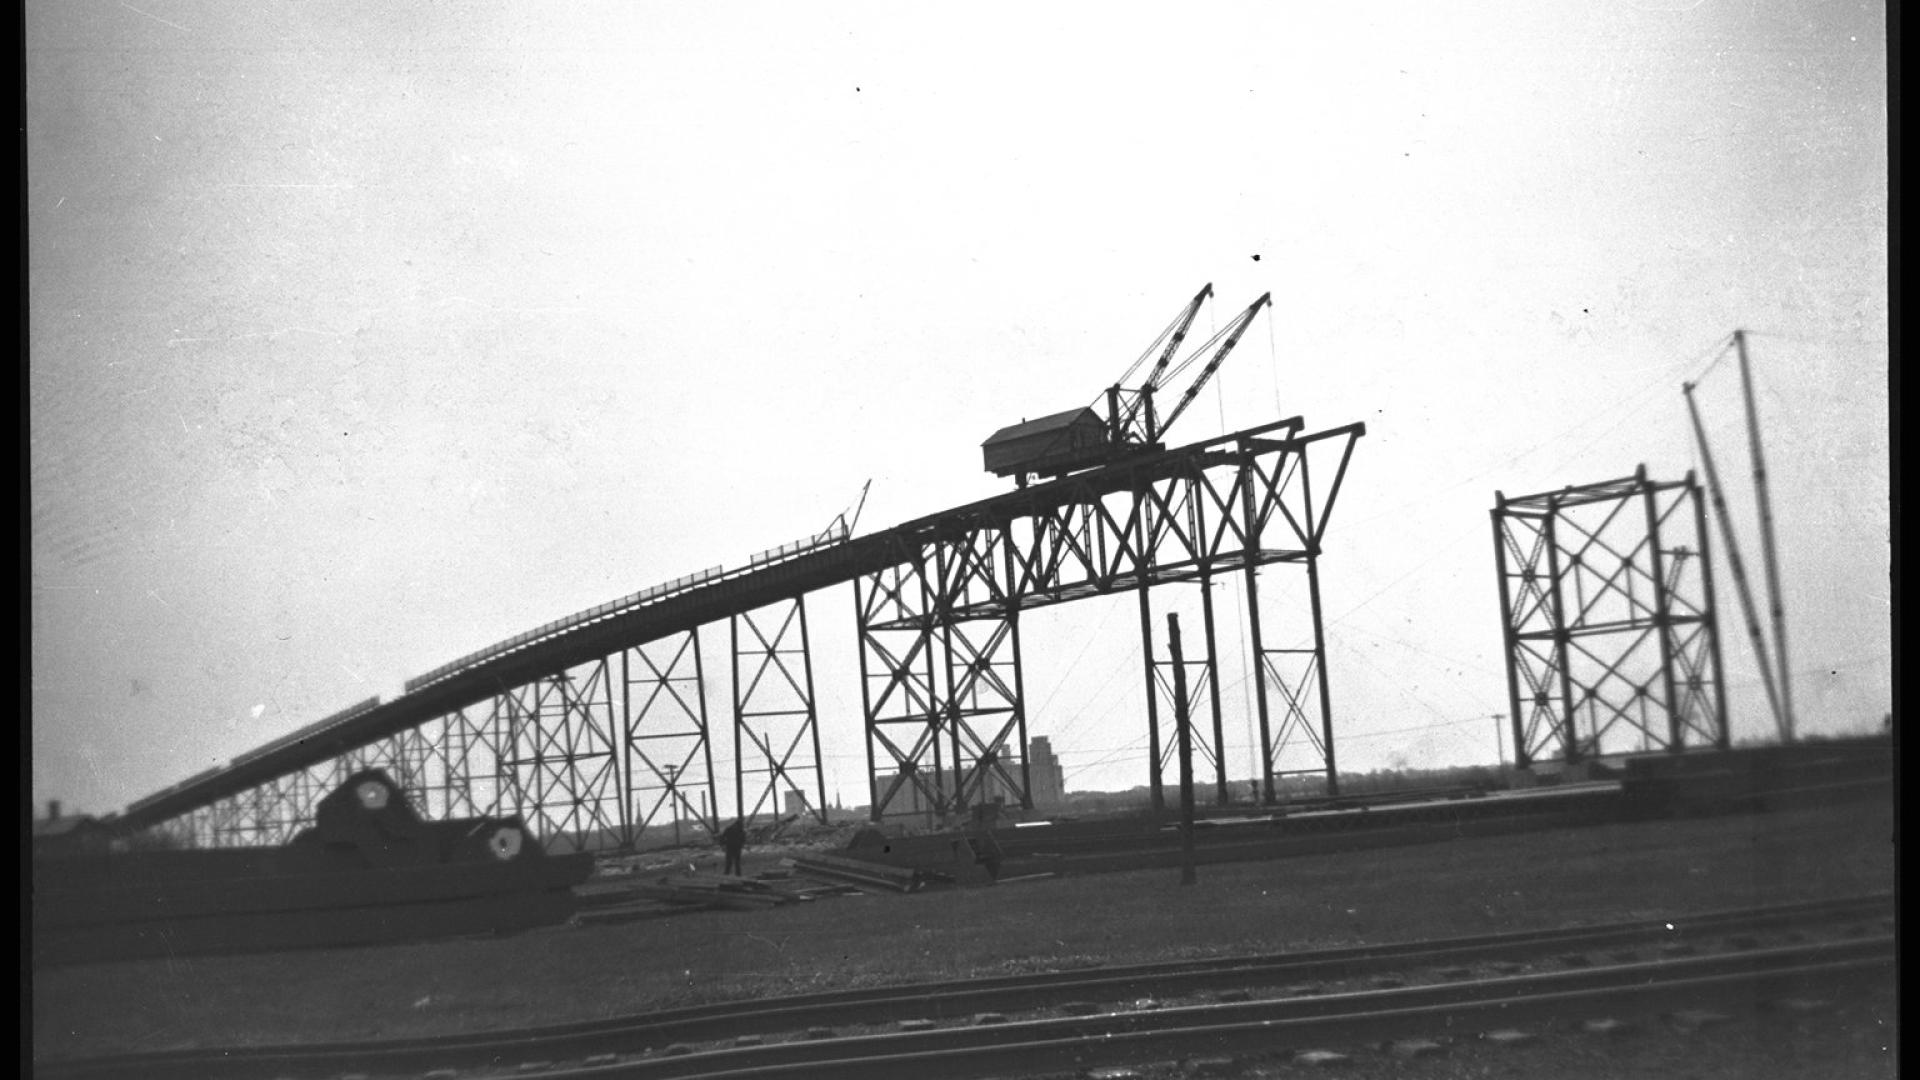 Silhouette of crane on bridge constructing bridge.